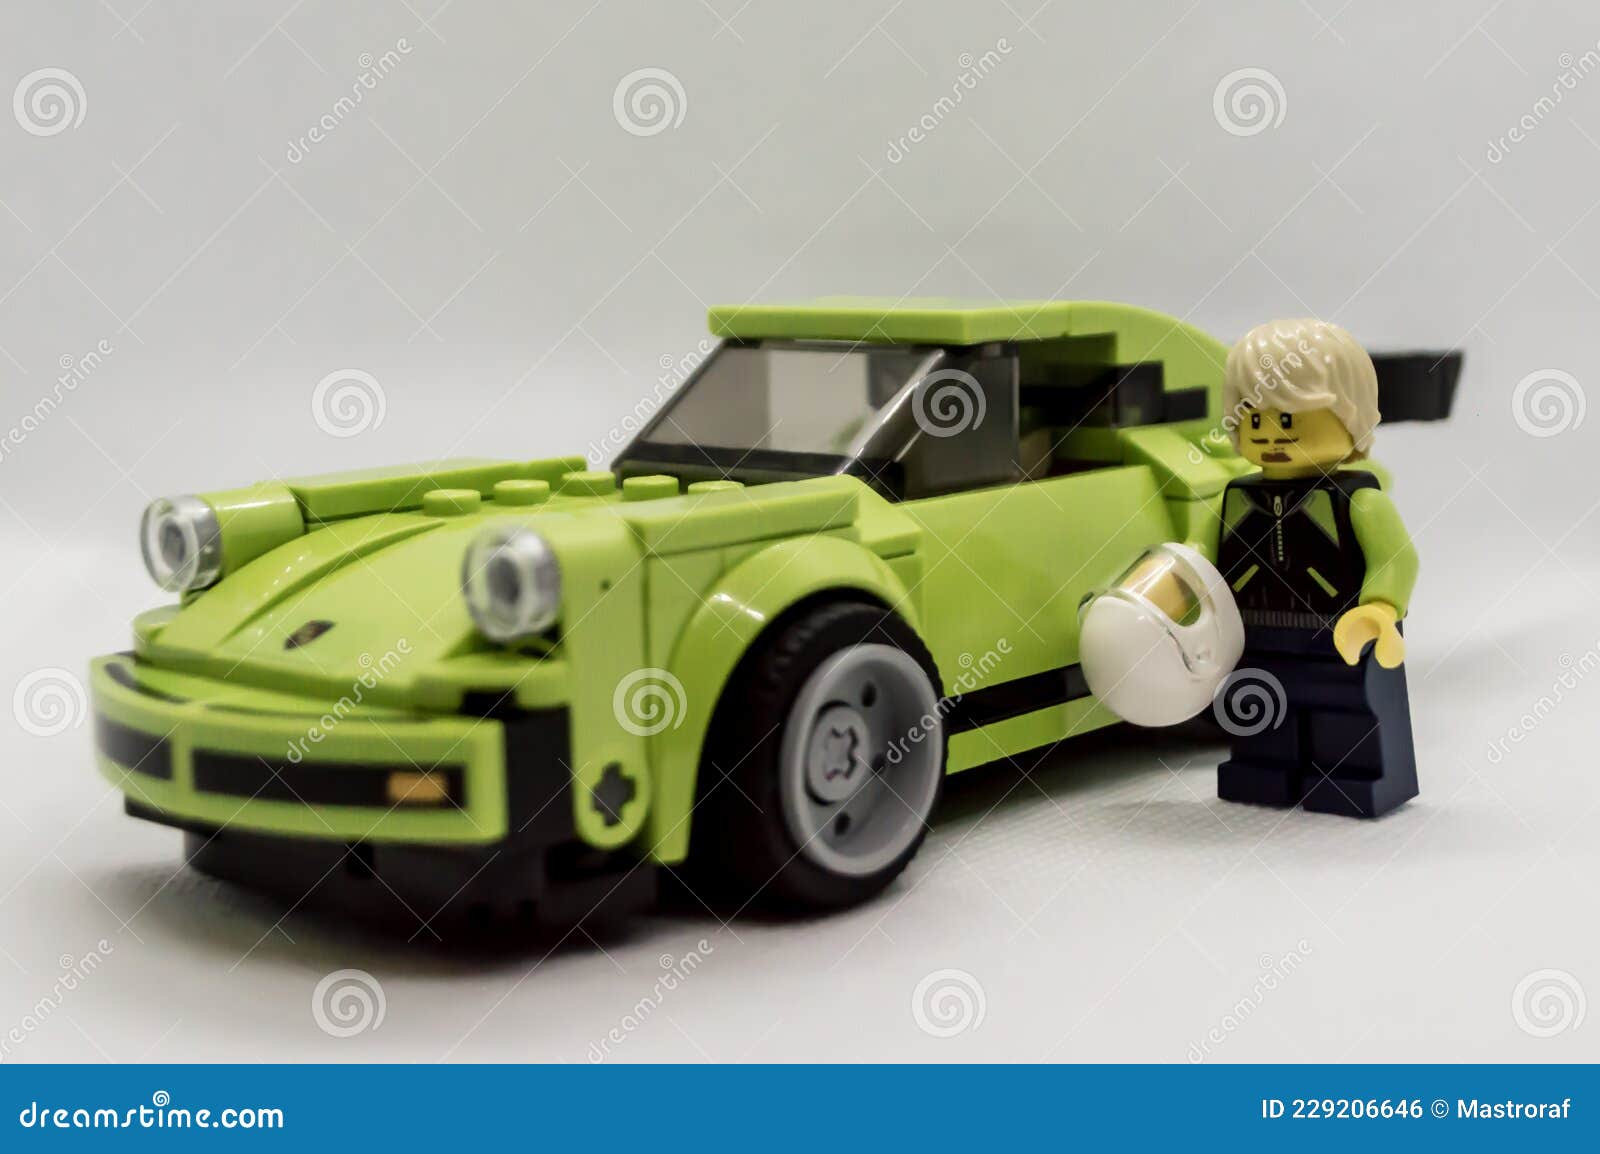 Lego Porsche 911 Turbo Model Editorial Photo - Image of children, play:  229206646